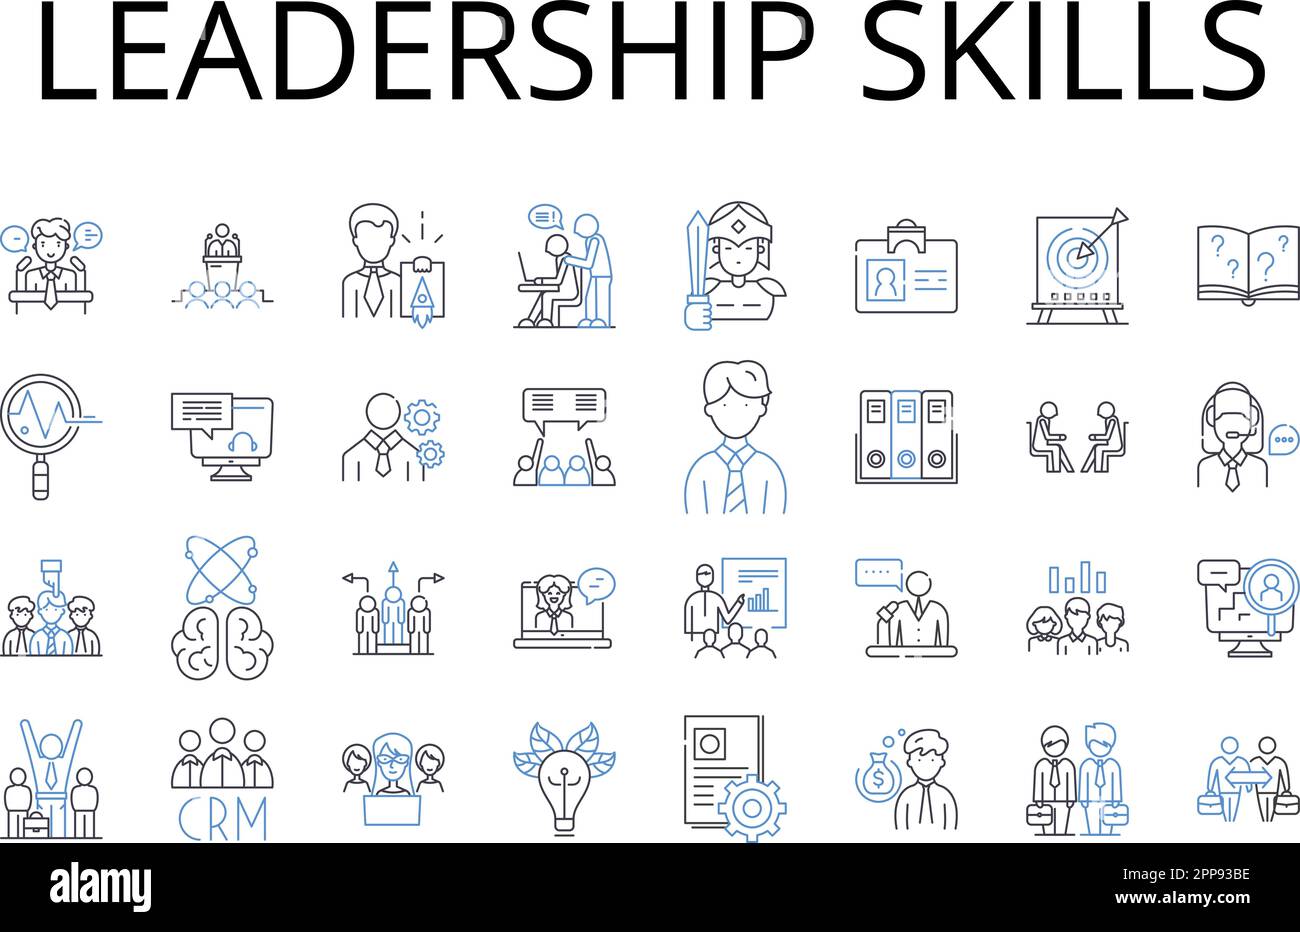 Leadership Skills Line Icons Collection Communication Skills Teamwork